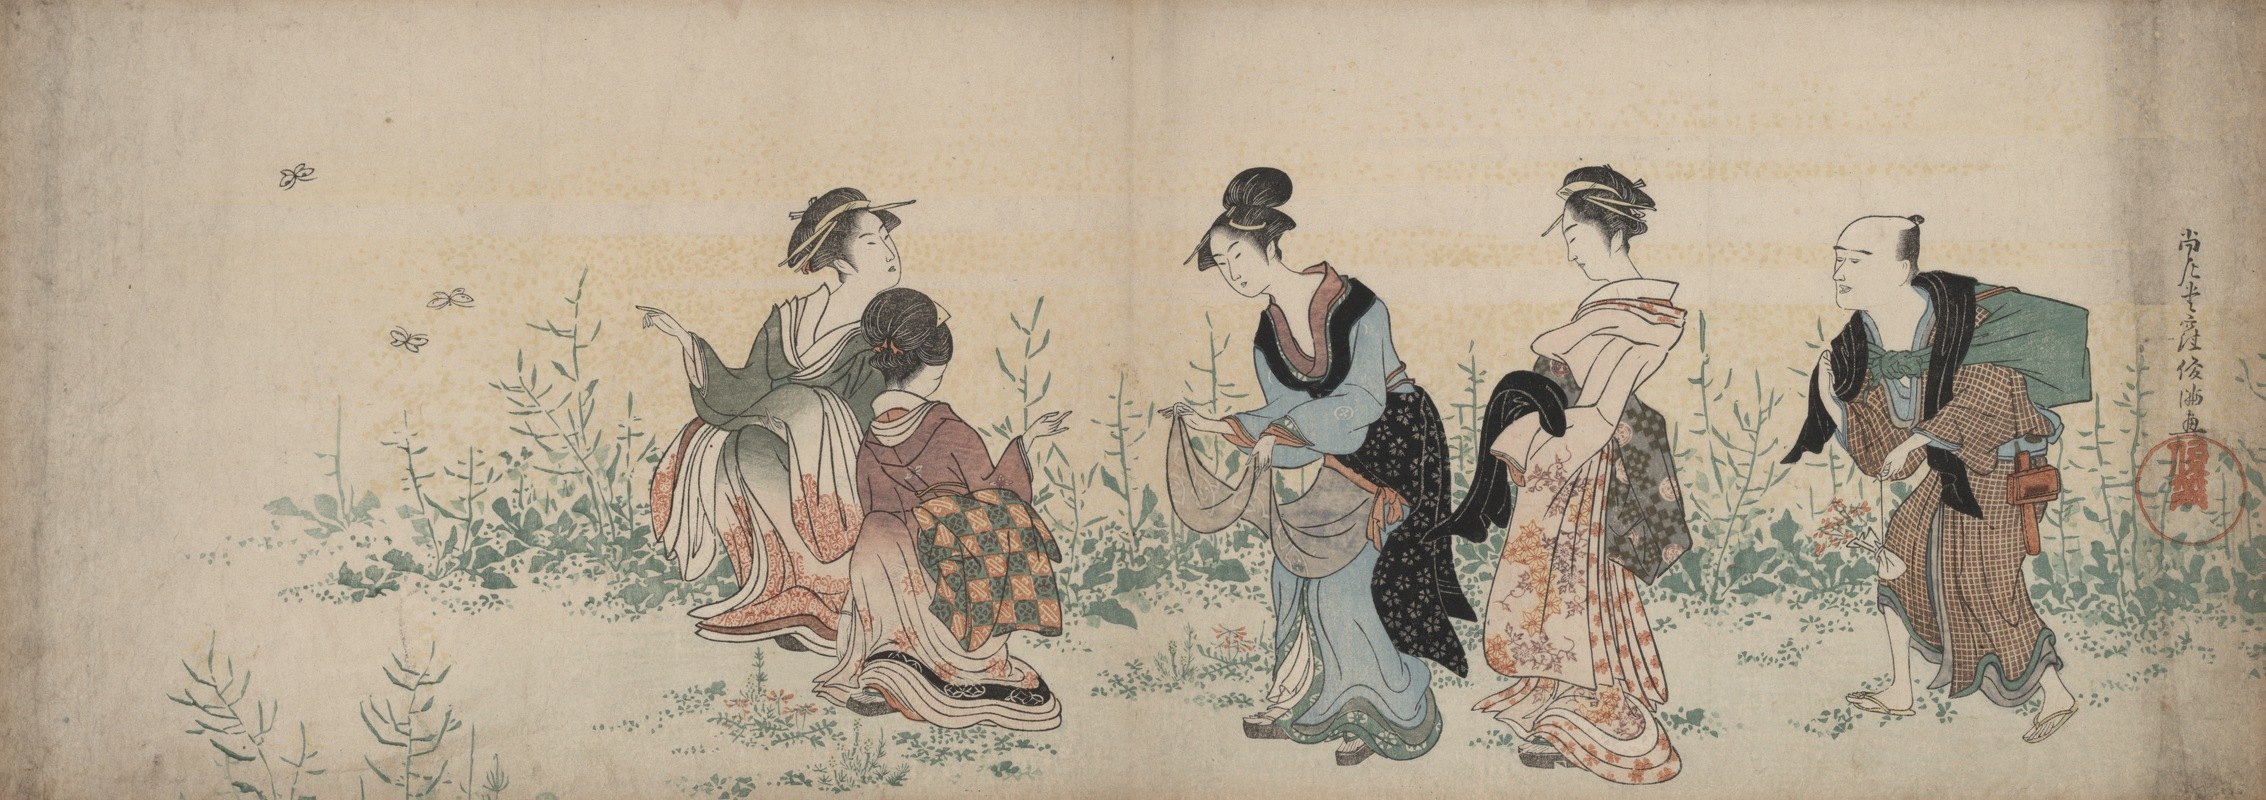 四个女孩和一个仆人在欣赏野花和蝴蝶`Four girls and a servant enjoying wild flowers and butterflies (1787) by Kubo Shunman